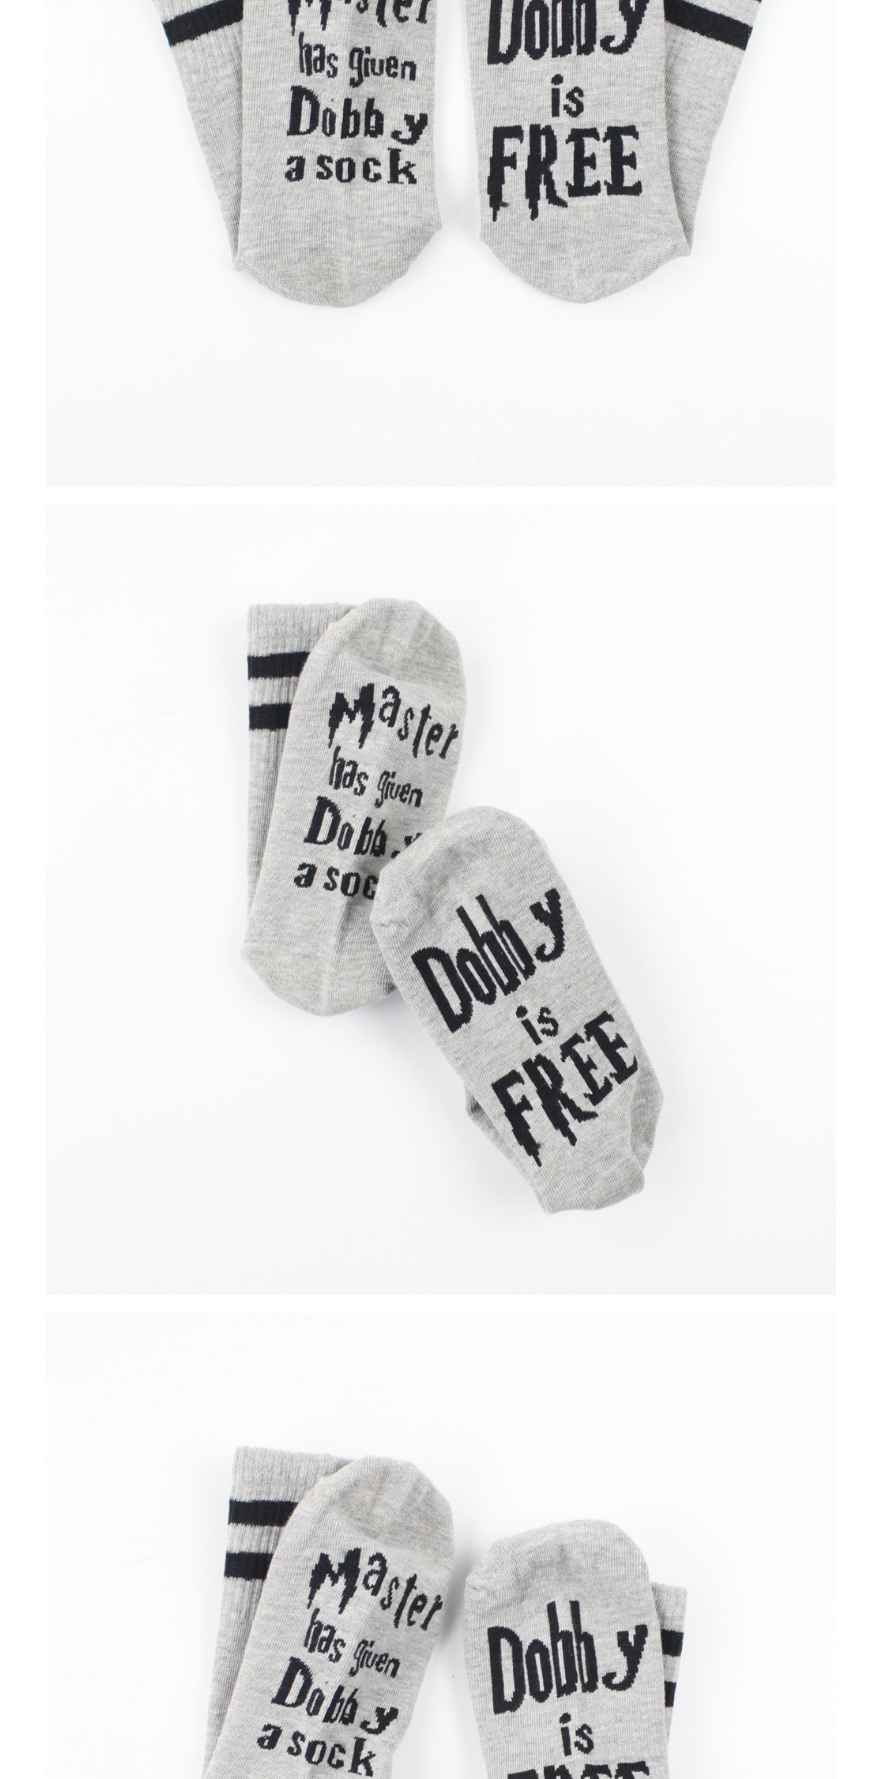 Fashion Dark Gray White Striped Socks With Letter Socks,Fashion Socks